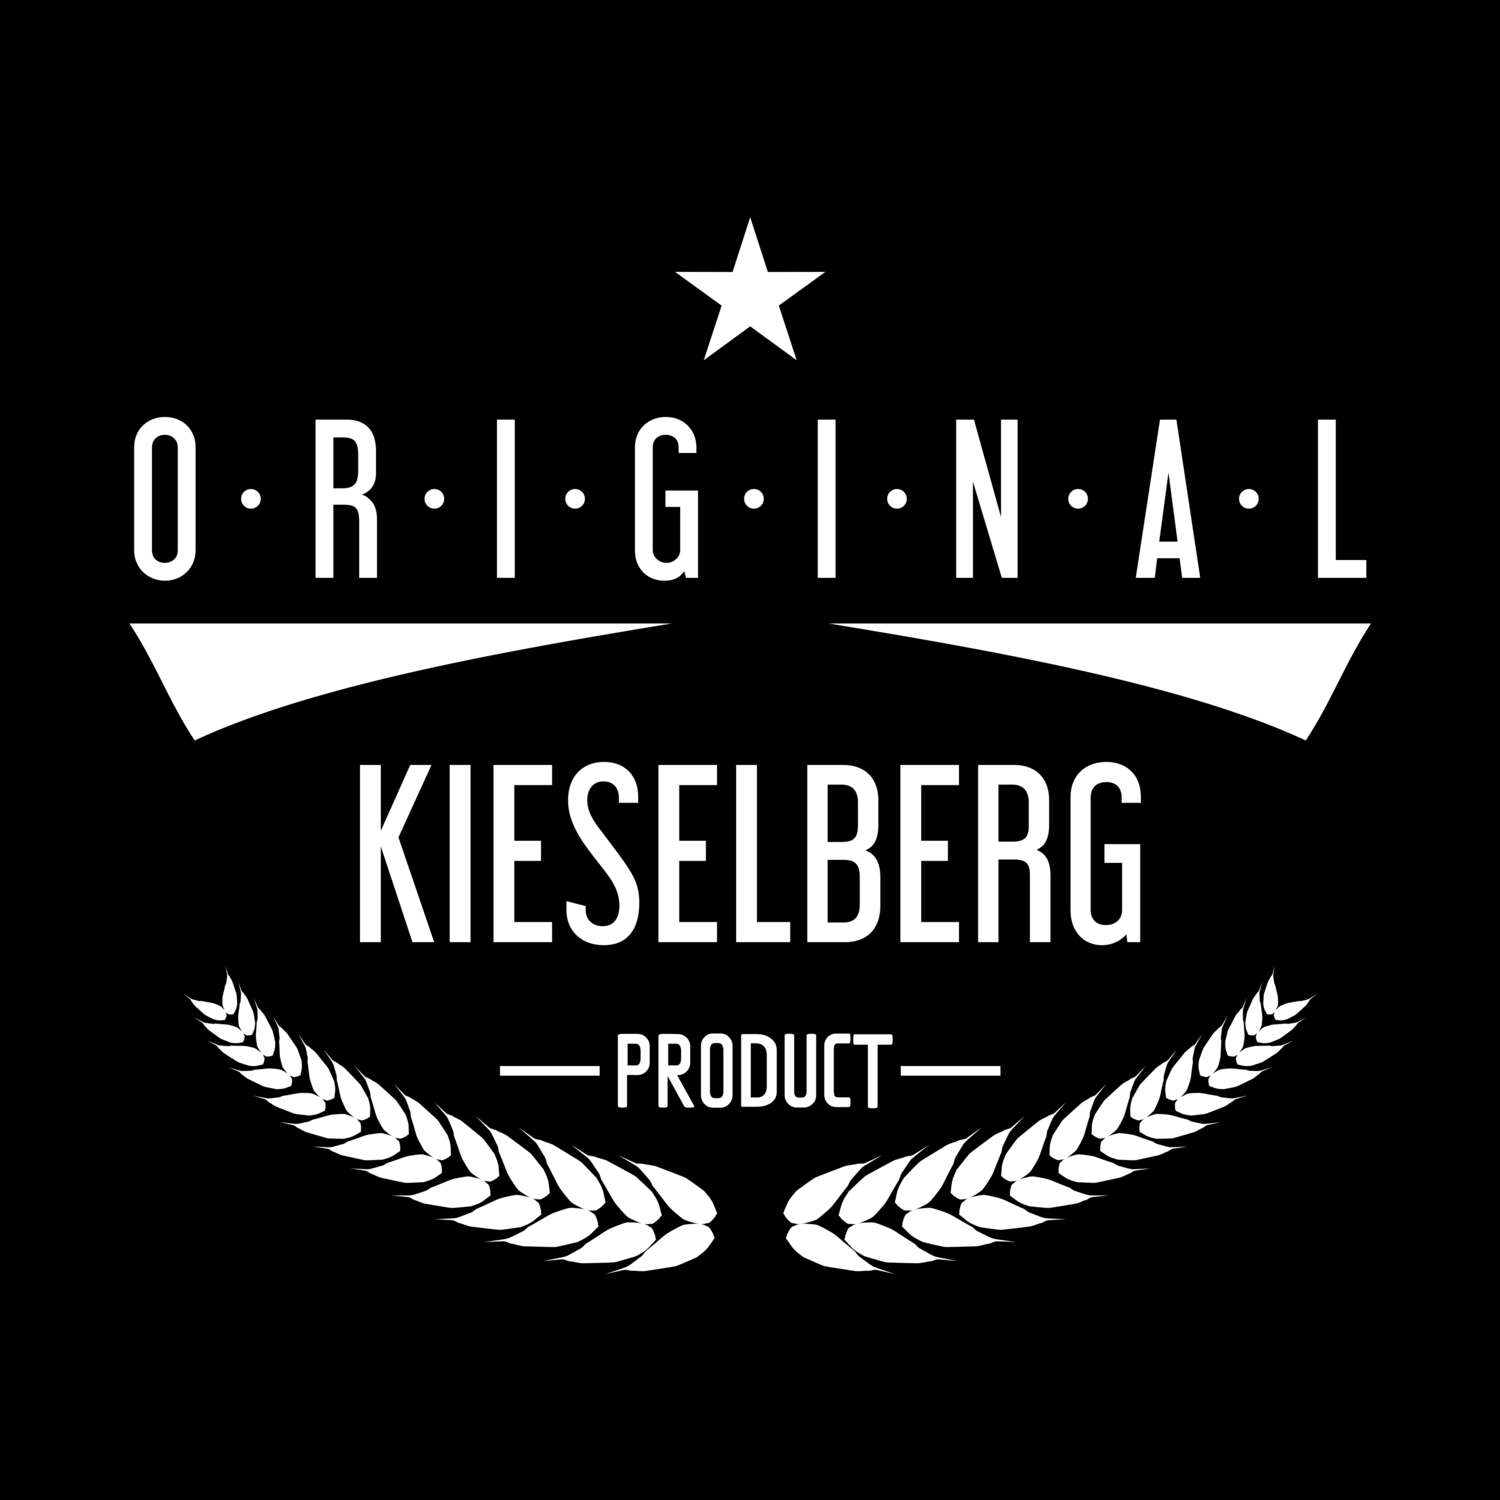 Kieselberg T-Shirt »Original Product«